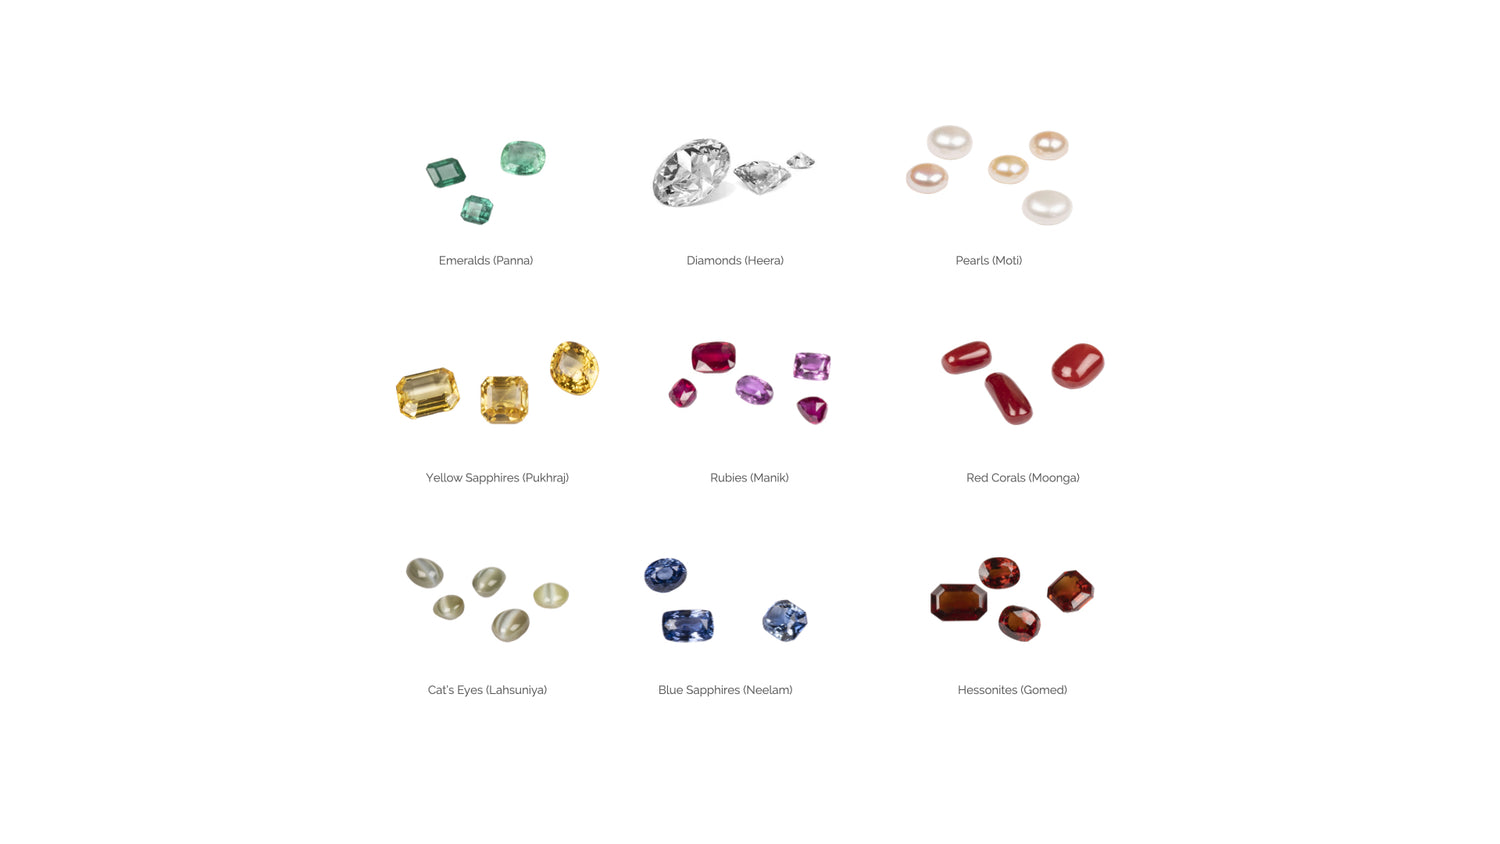 The Navratna Gemstones